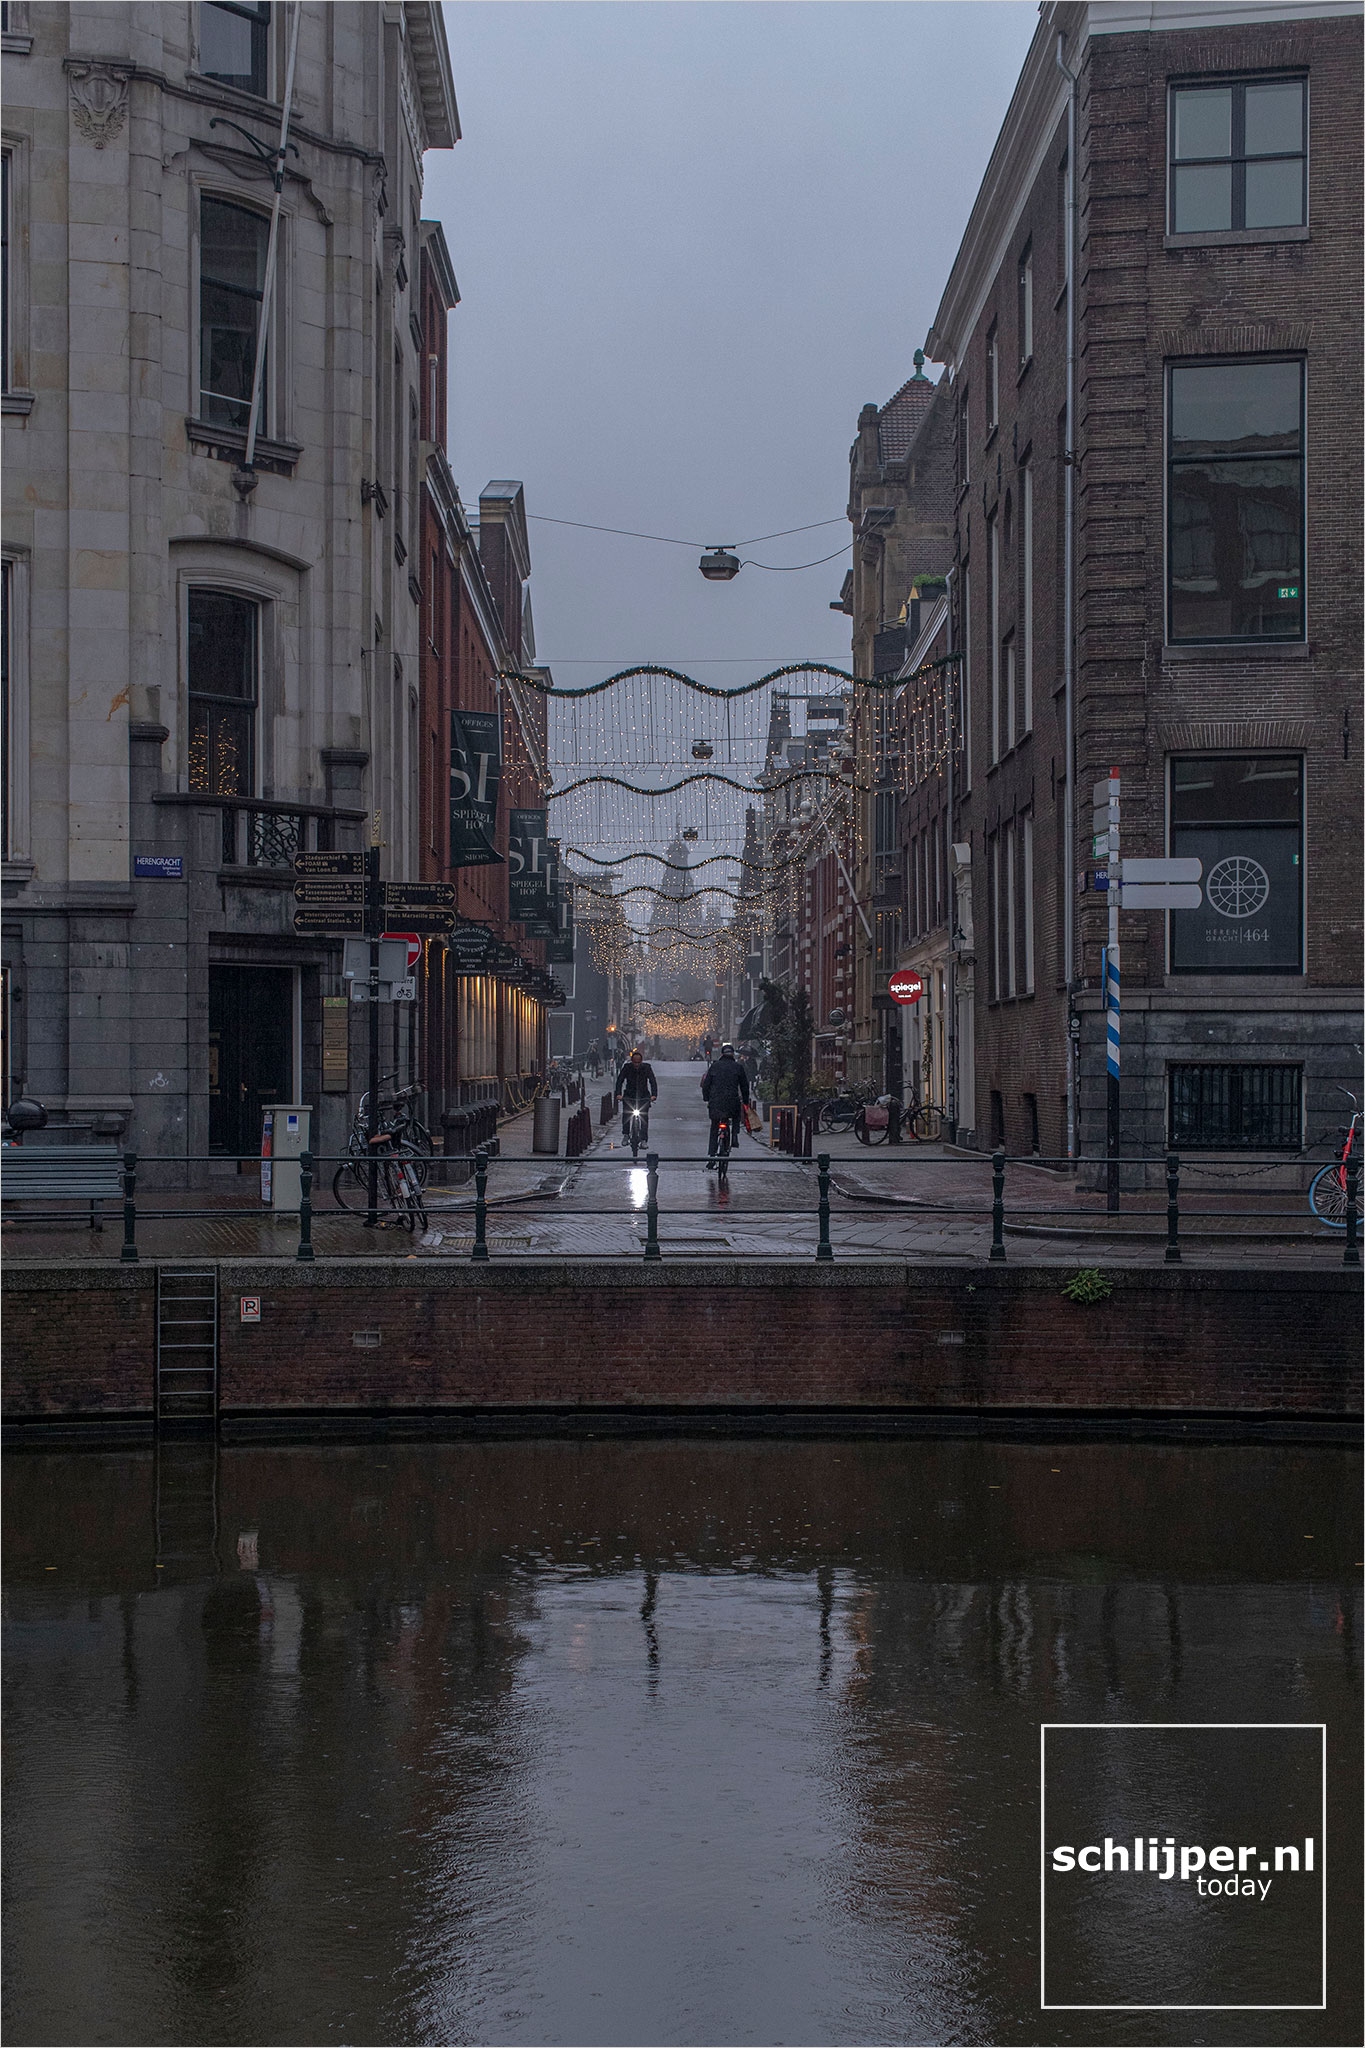 The Netherlands, Amsterdam, 12 december 2020